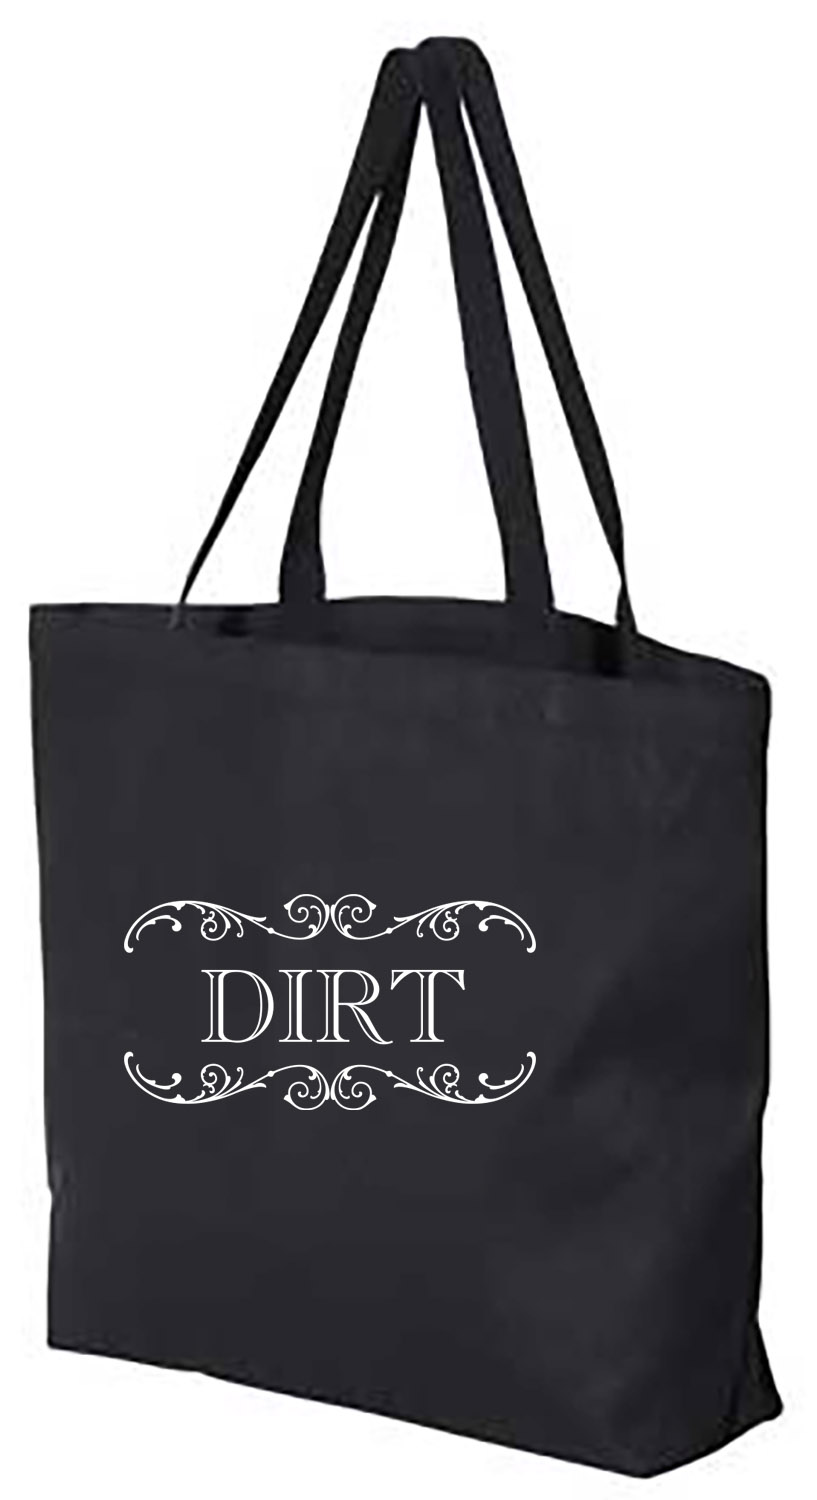 Dirt Bag Tote Bag Black 14.75 x 19.5 x 5 [dirt bag black] - $25.00 : Douche Bag  Bags